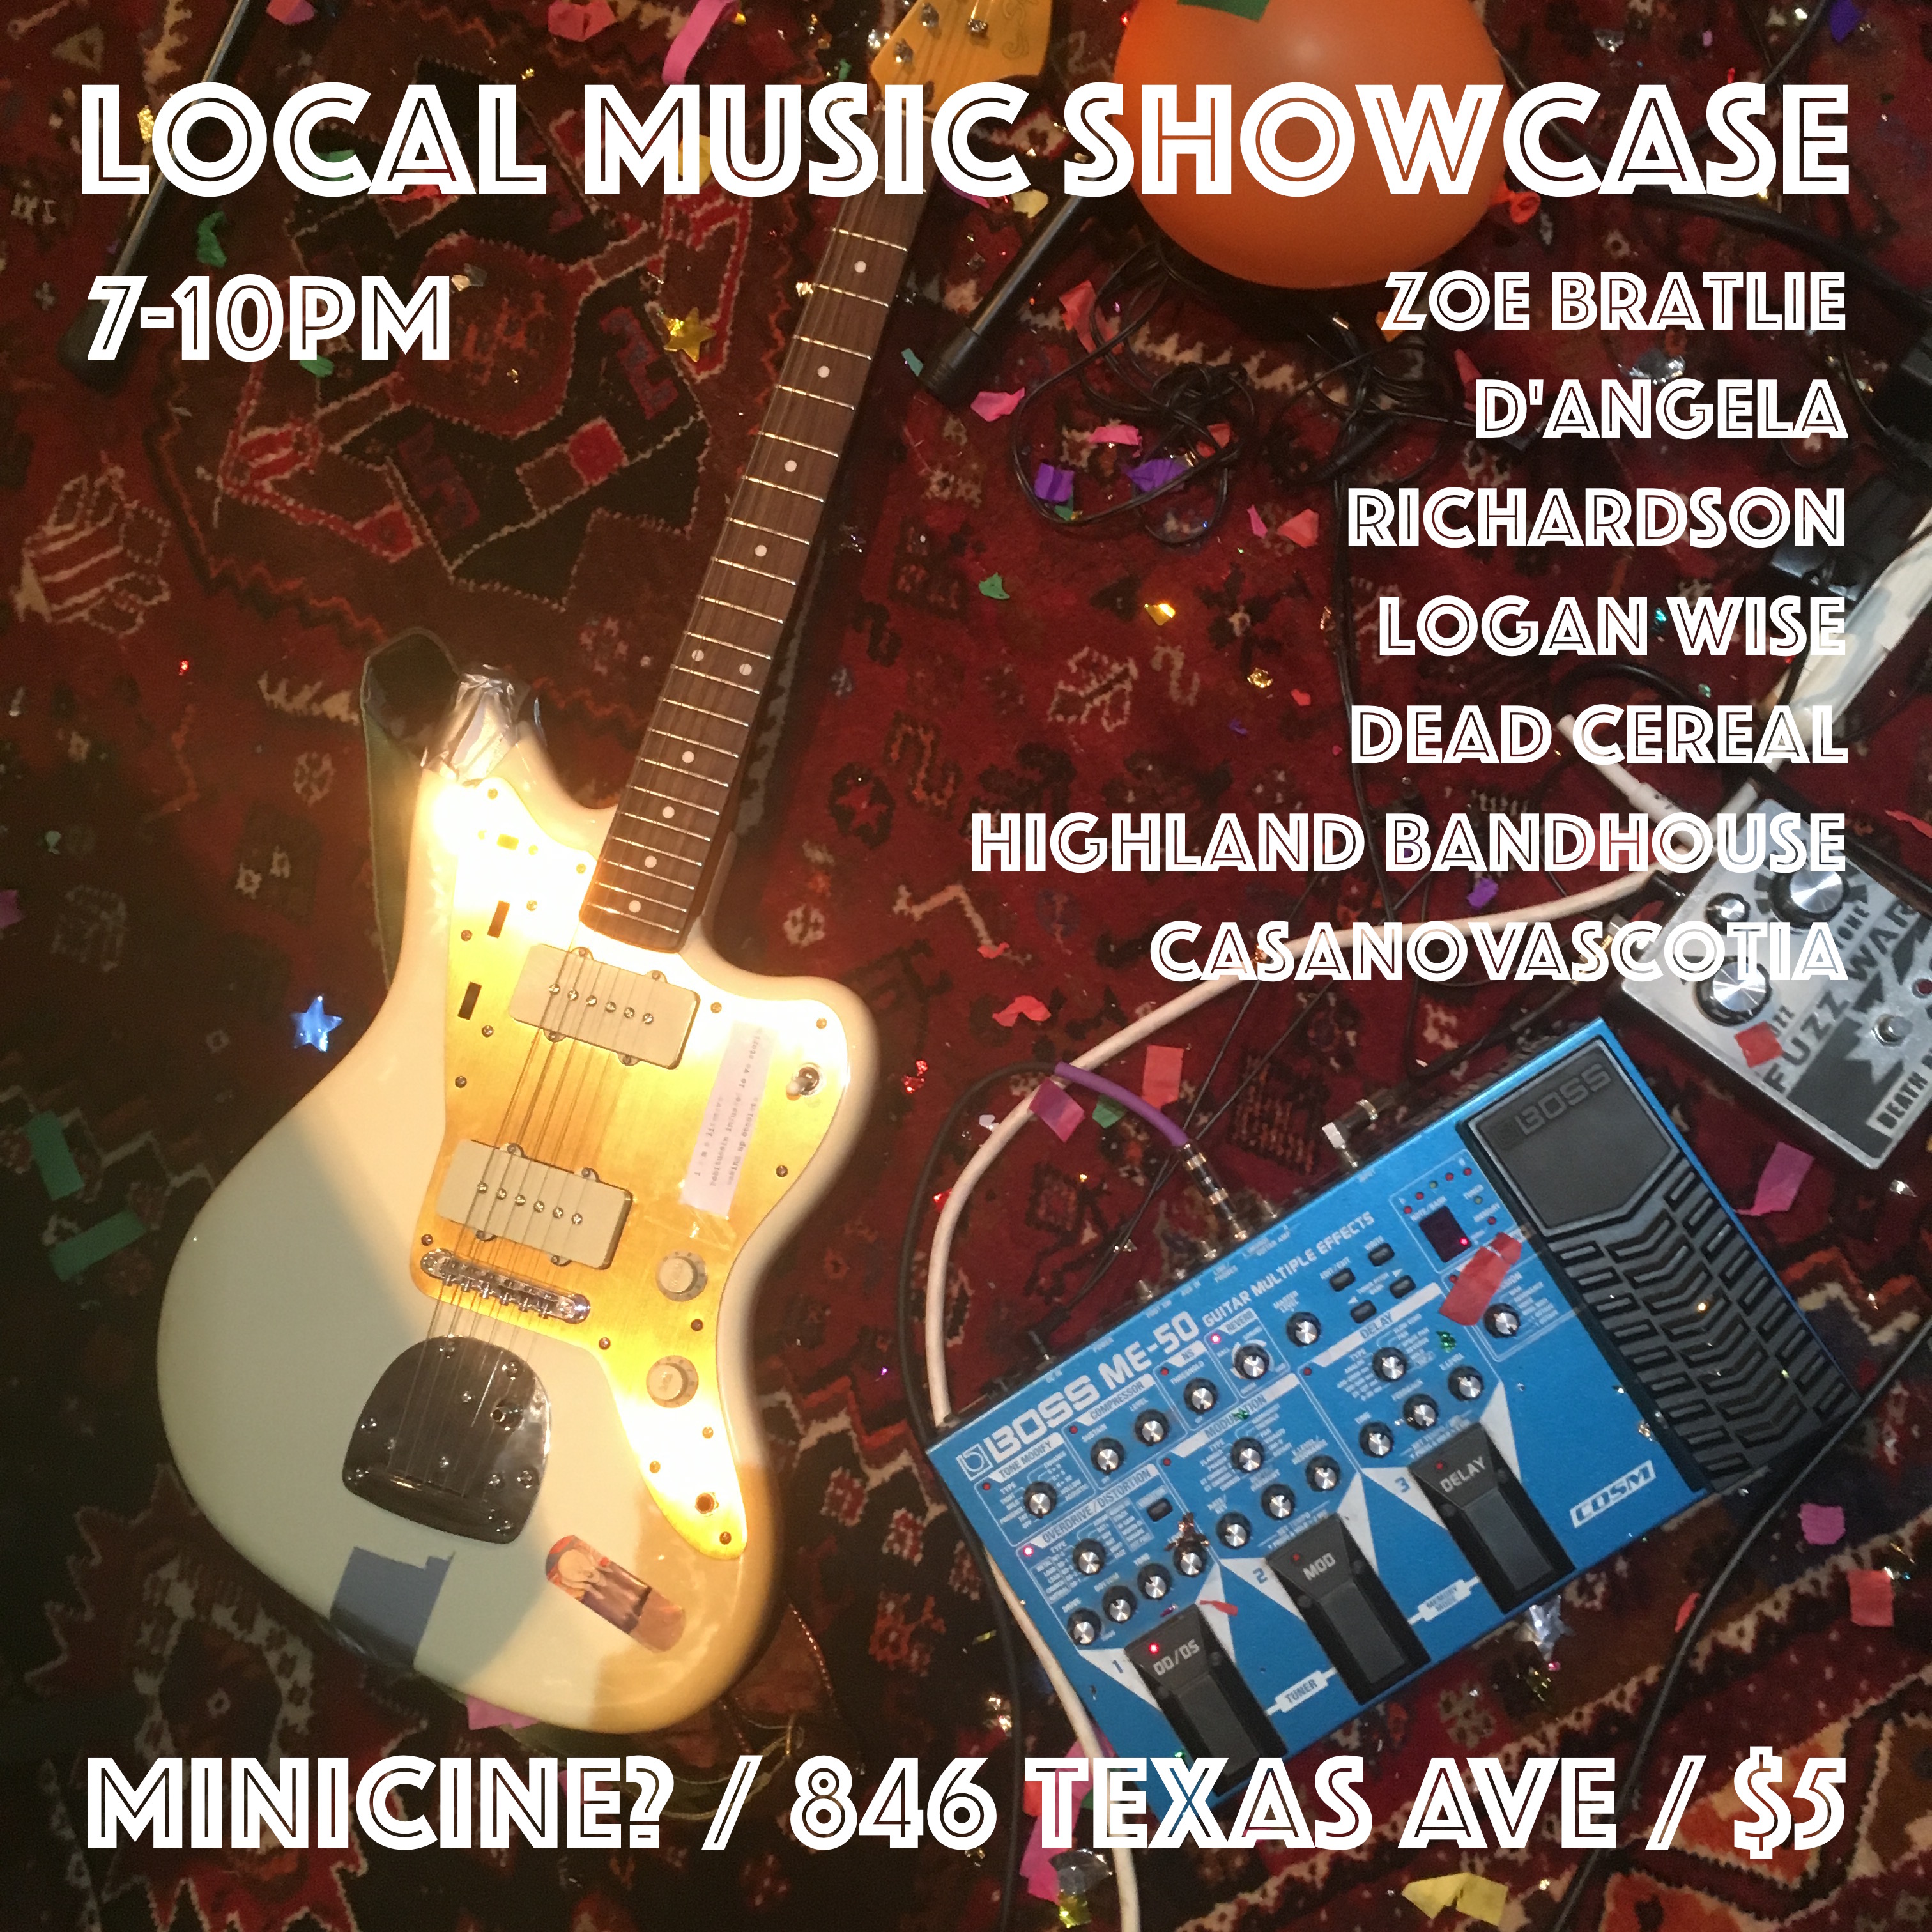 Local Music Showcase flyer